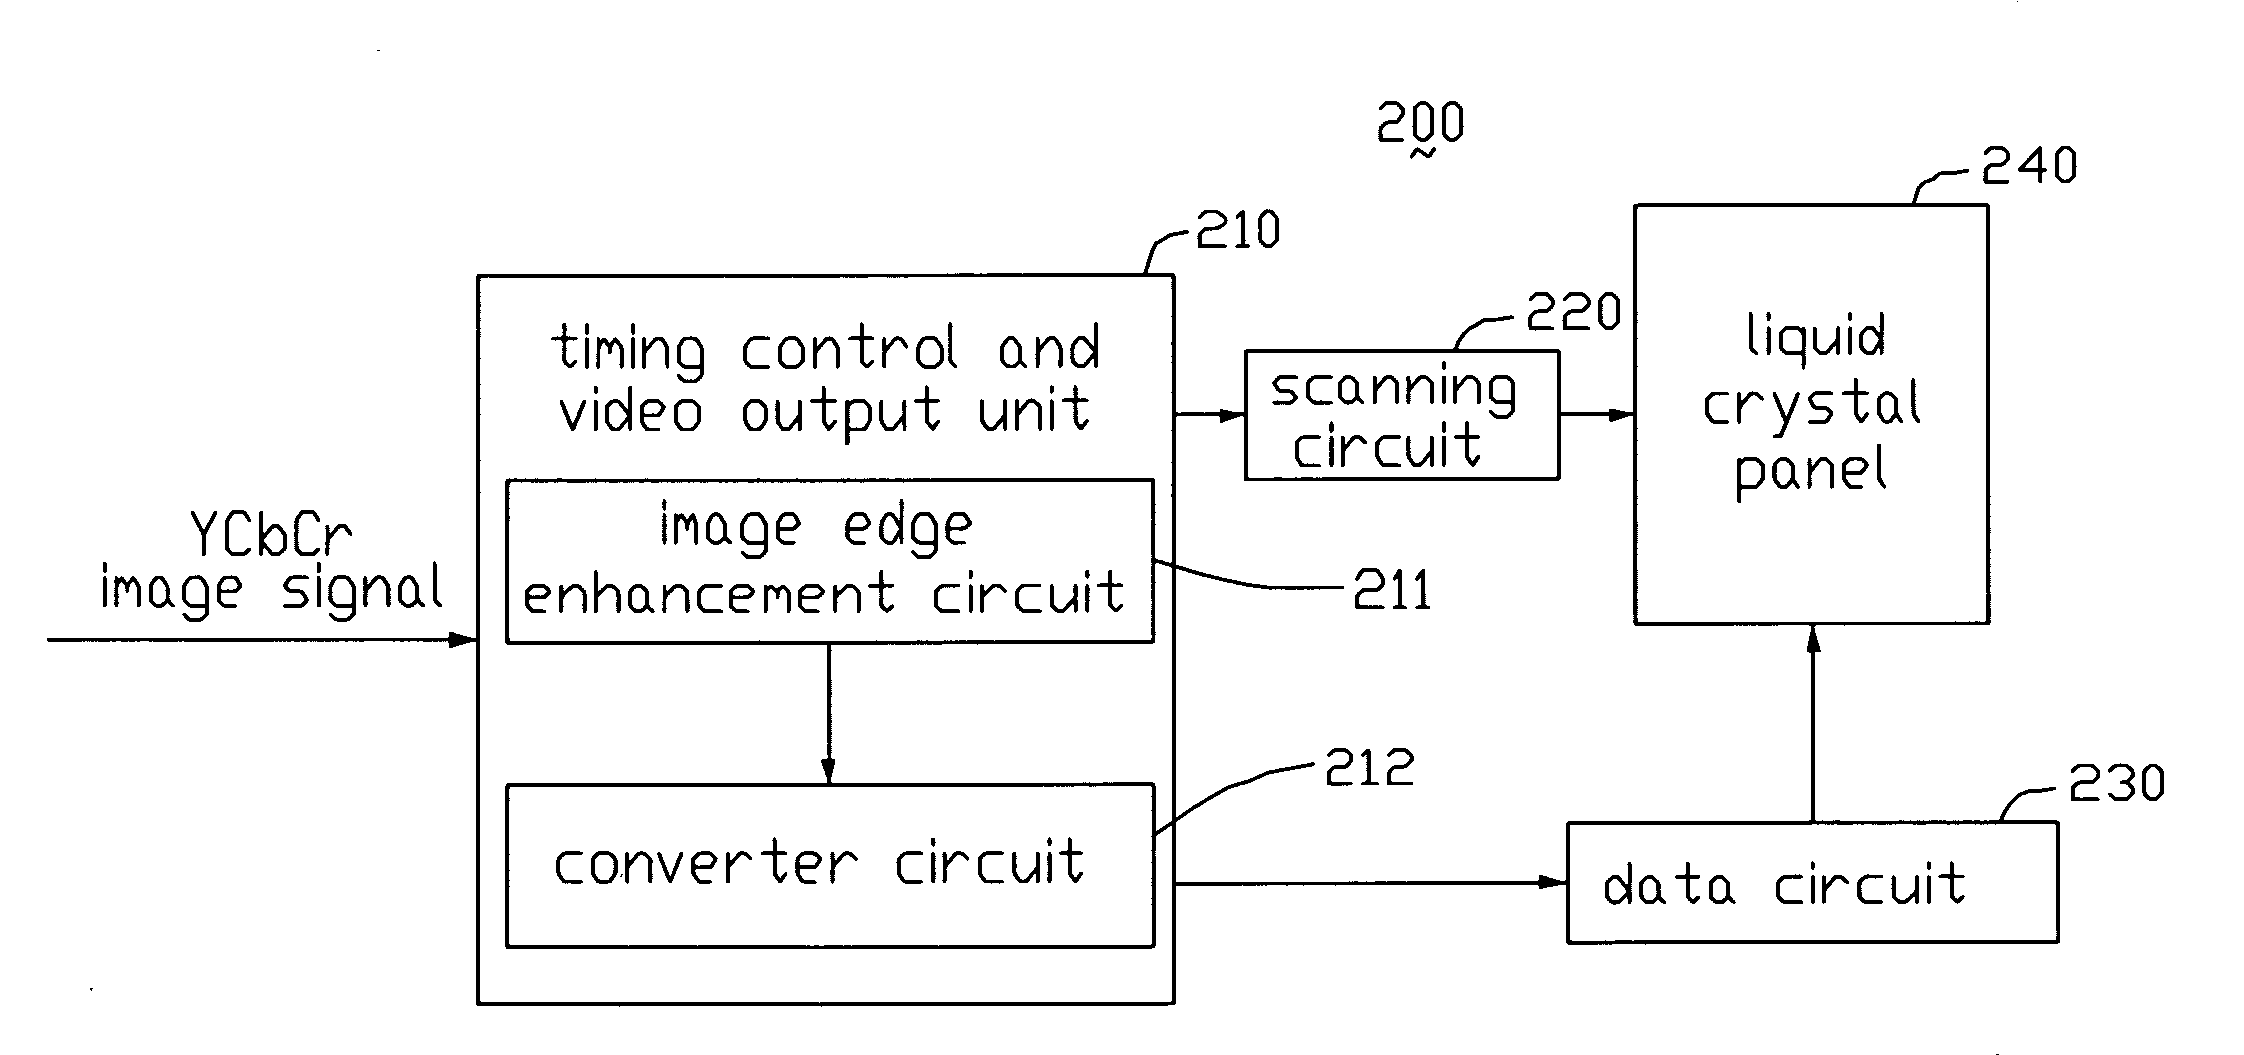 Liquid crystal display having image edge enhancement circuit and image edge enhancement method for same